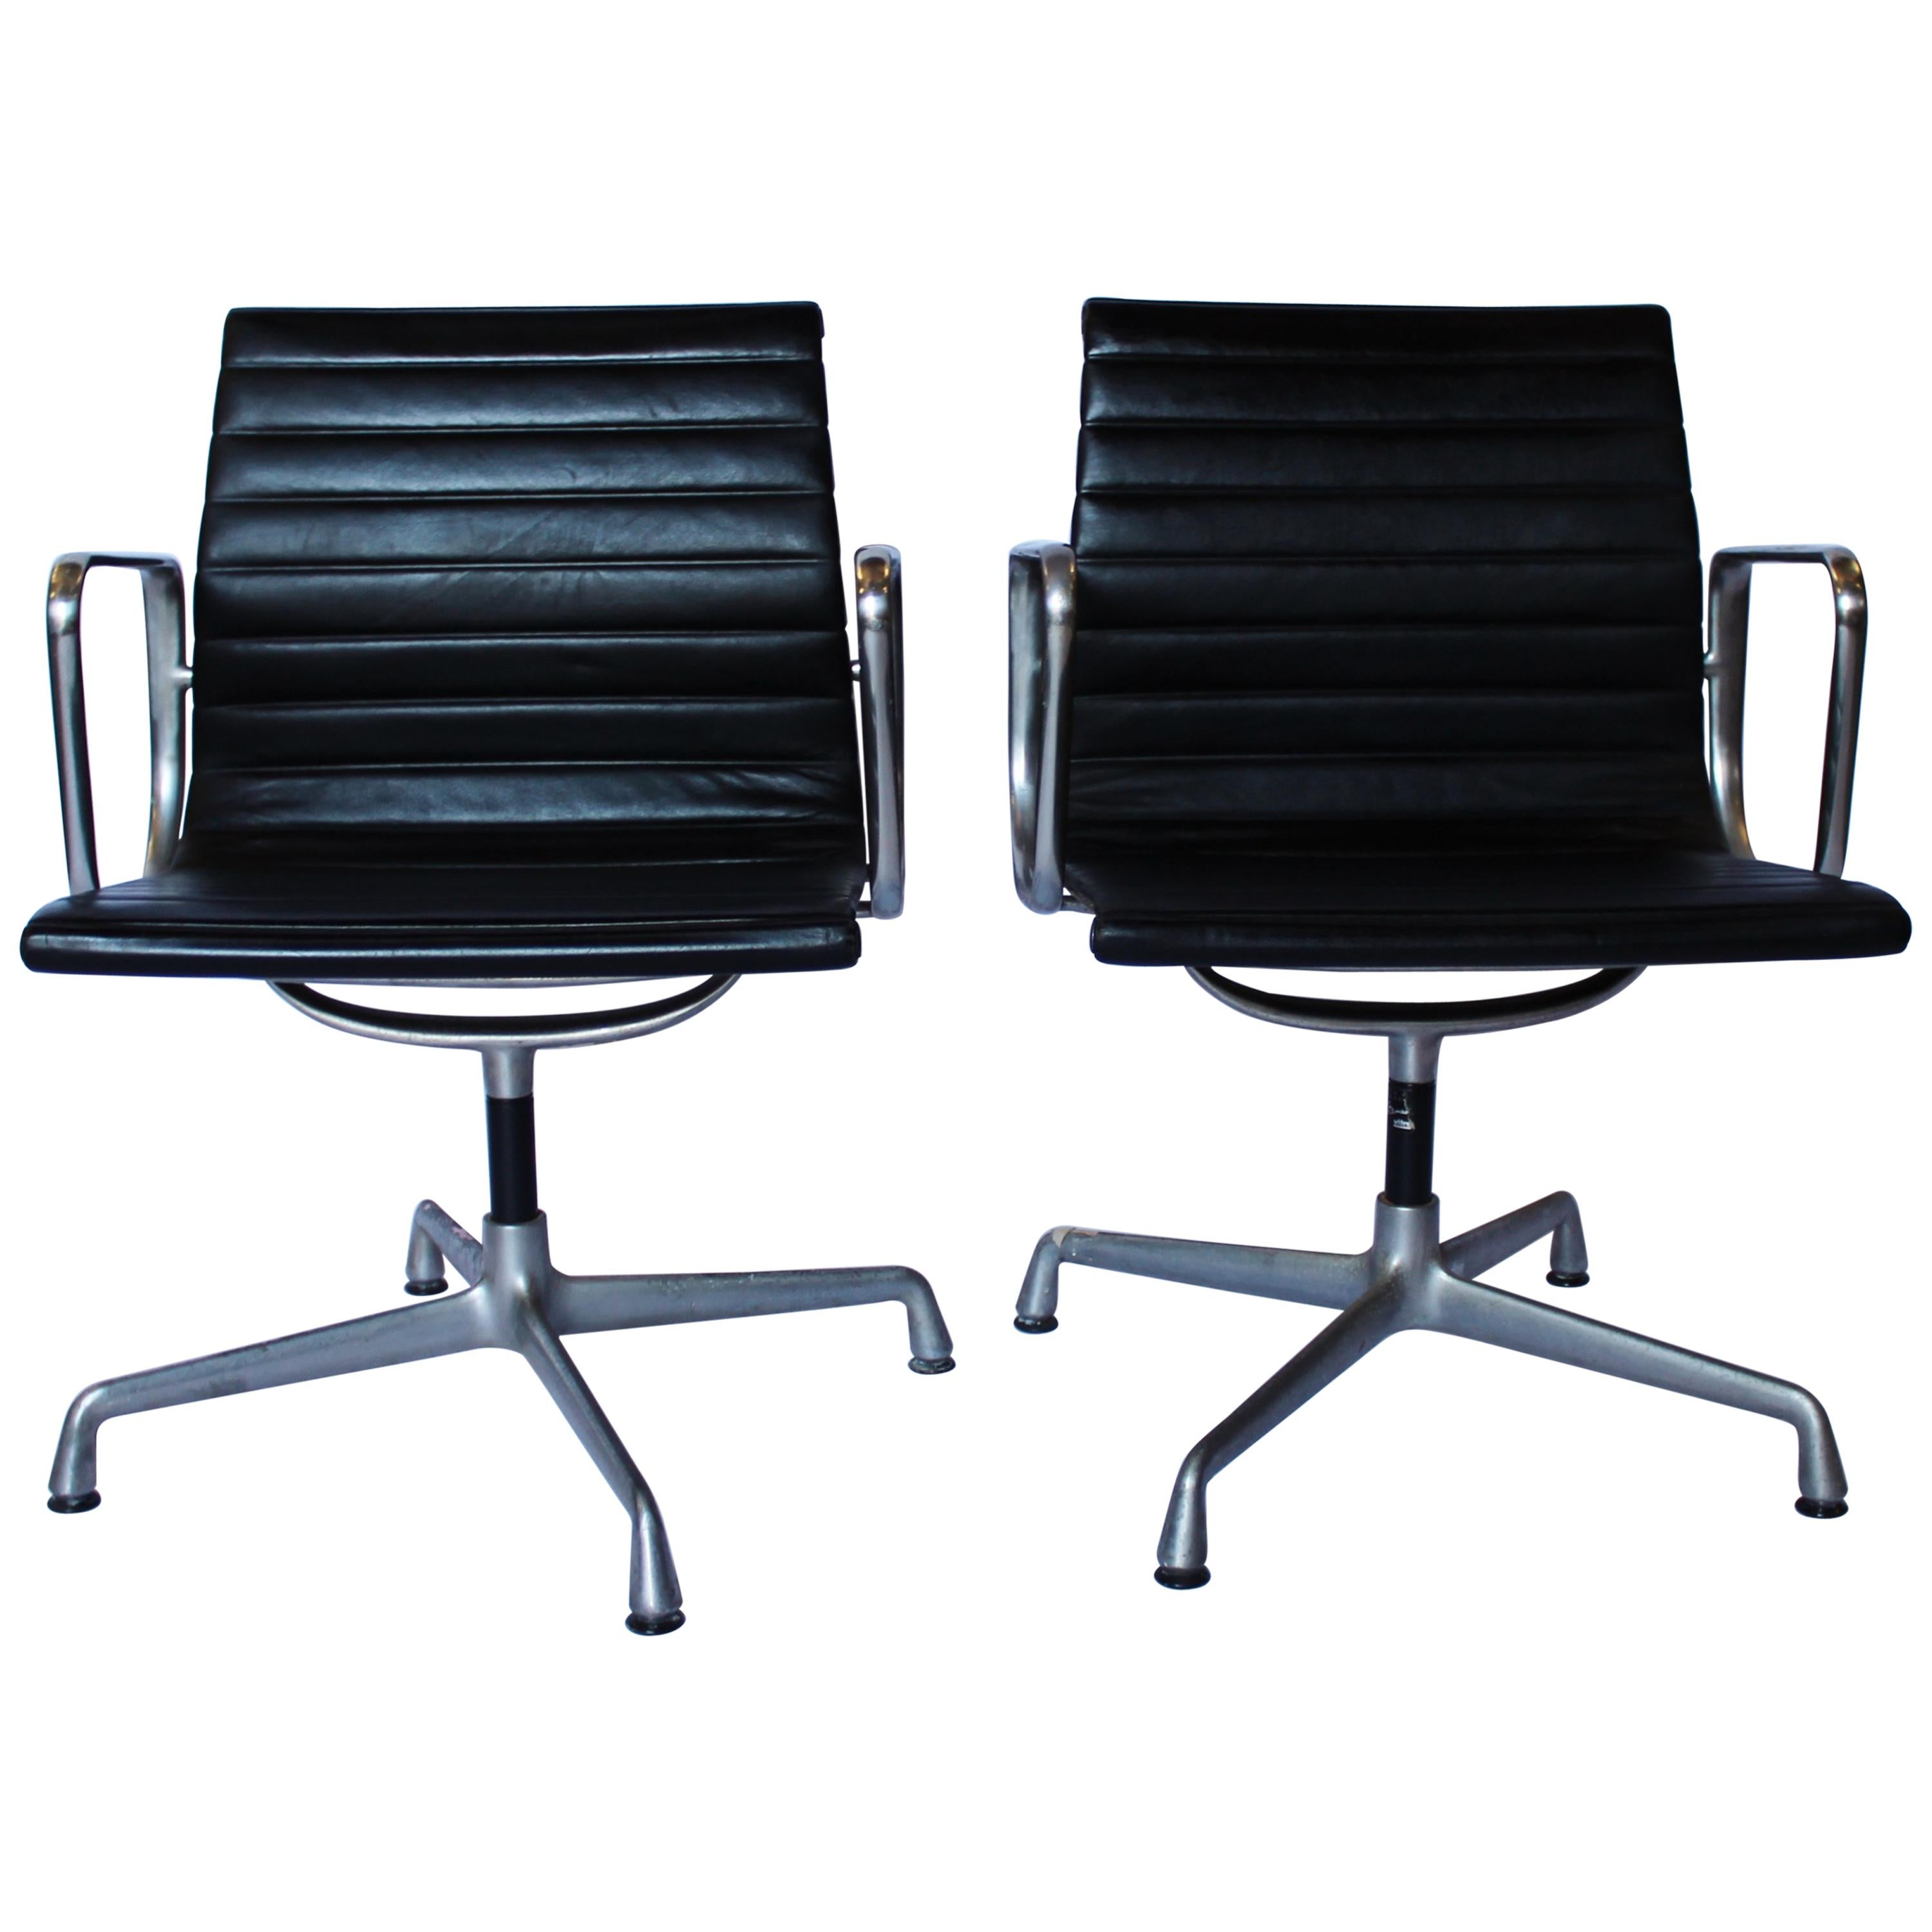 Satz Bürostühle, Modell EA 107, Charles and Ray Eames, 1970er Jahre